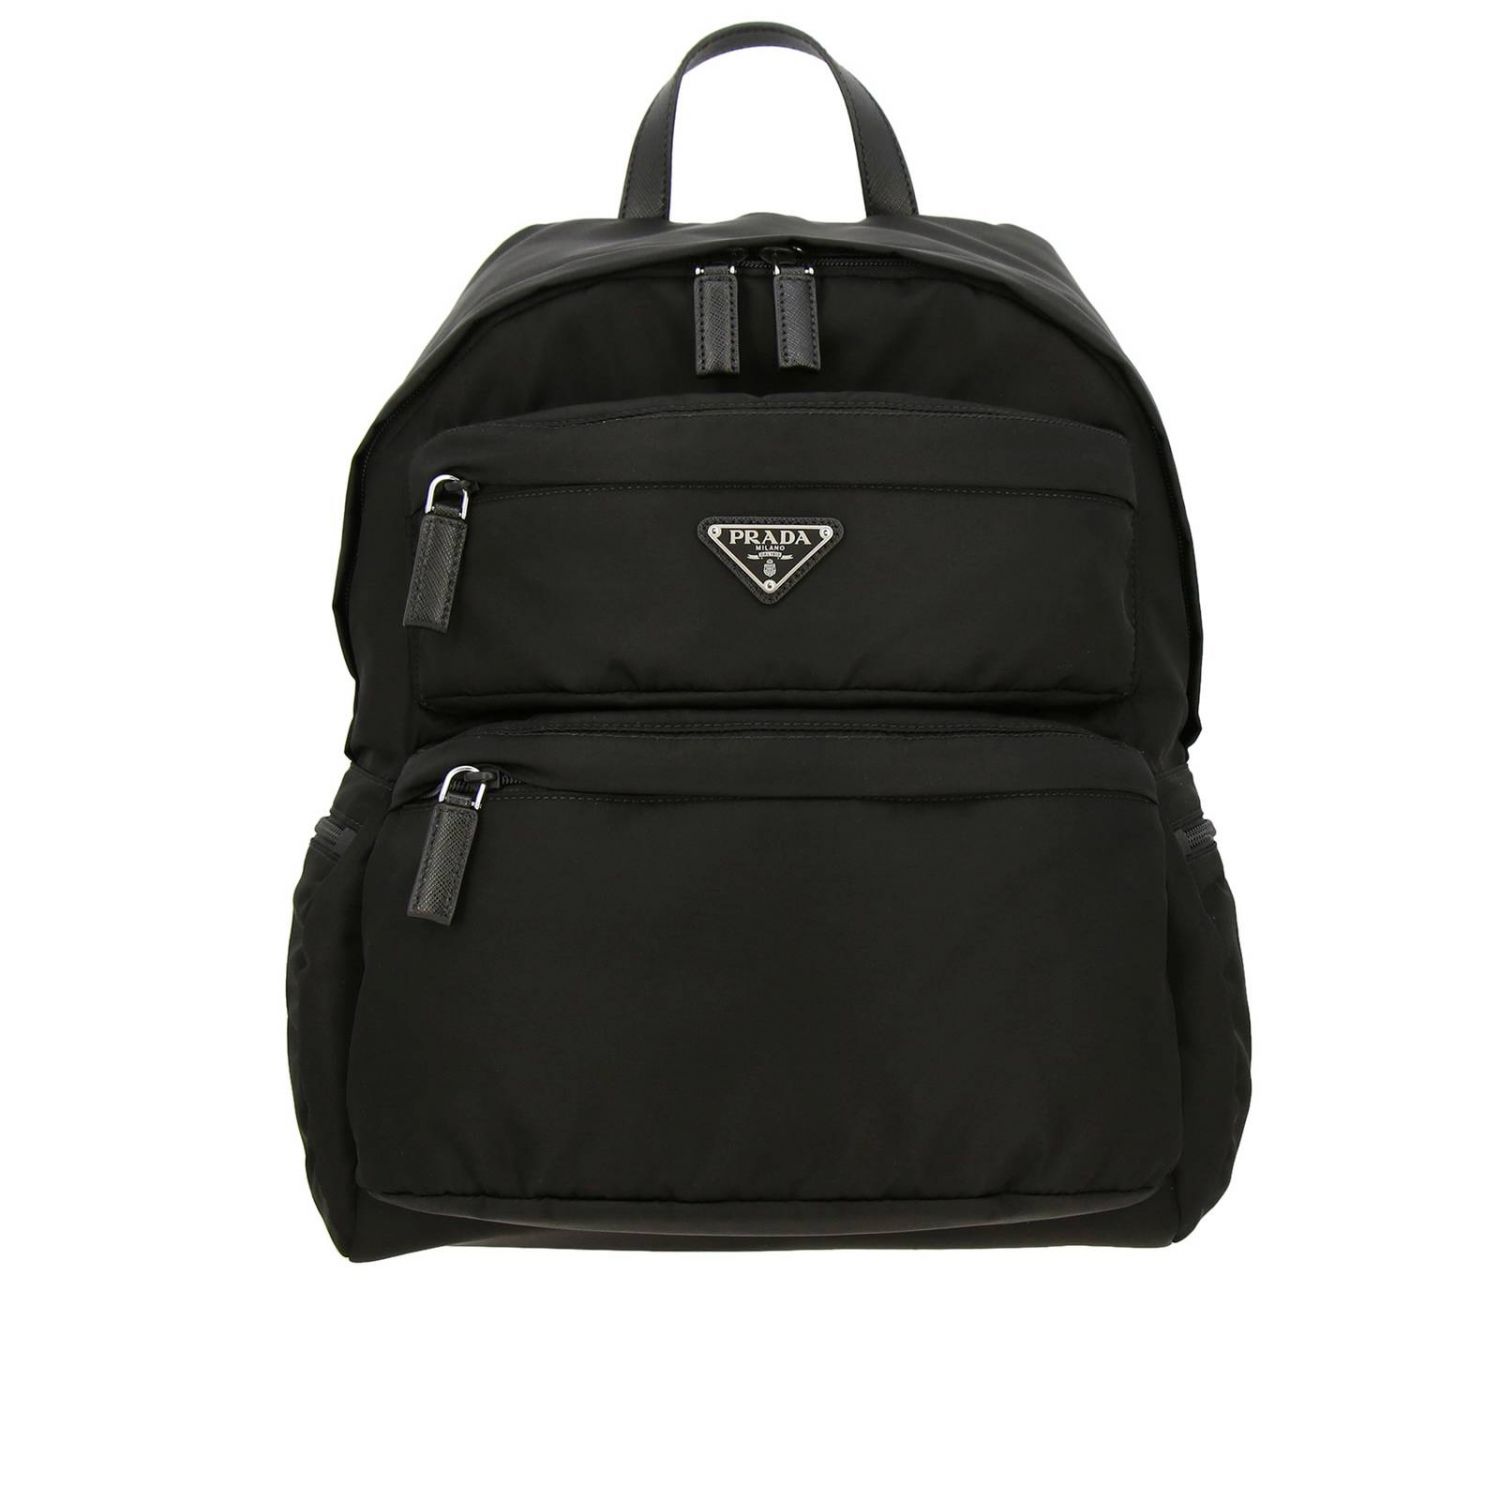 Full zip nylon backpack with Prada triangular logo and multi pockets